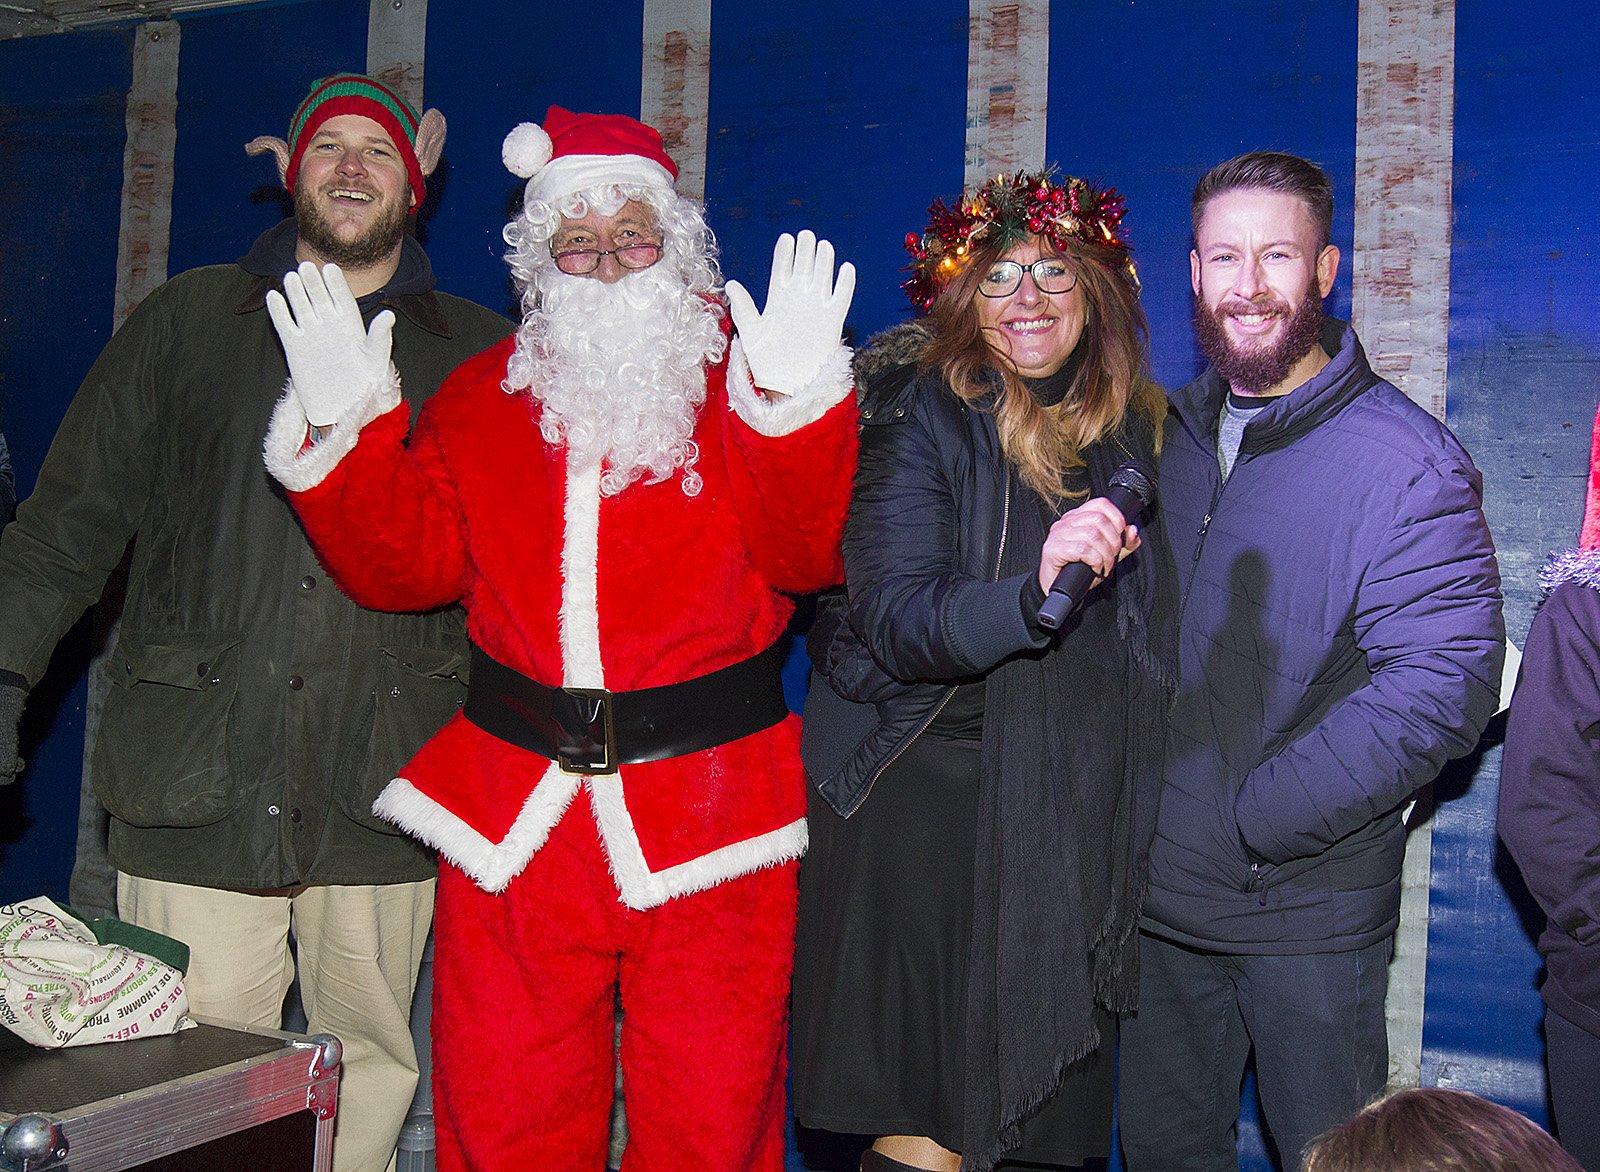 Michael Boon, Santa, Dawn Maciver and the Ninja Ali Hay on stage at Kelso